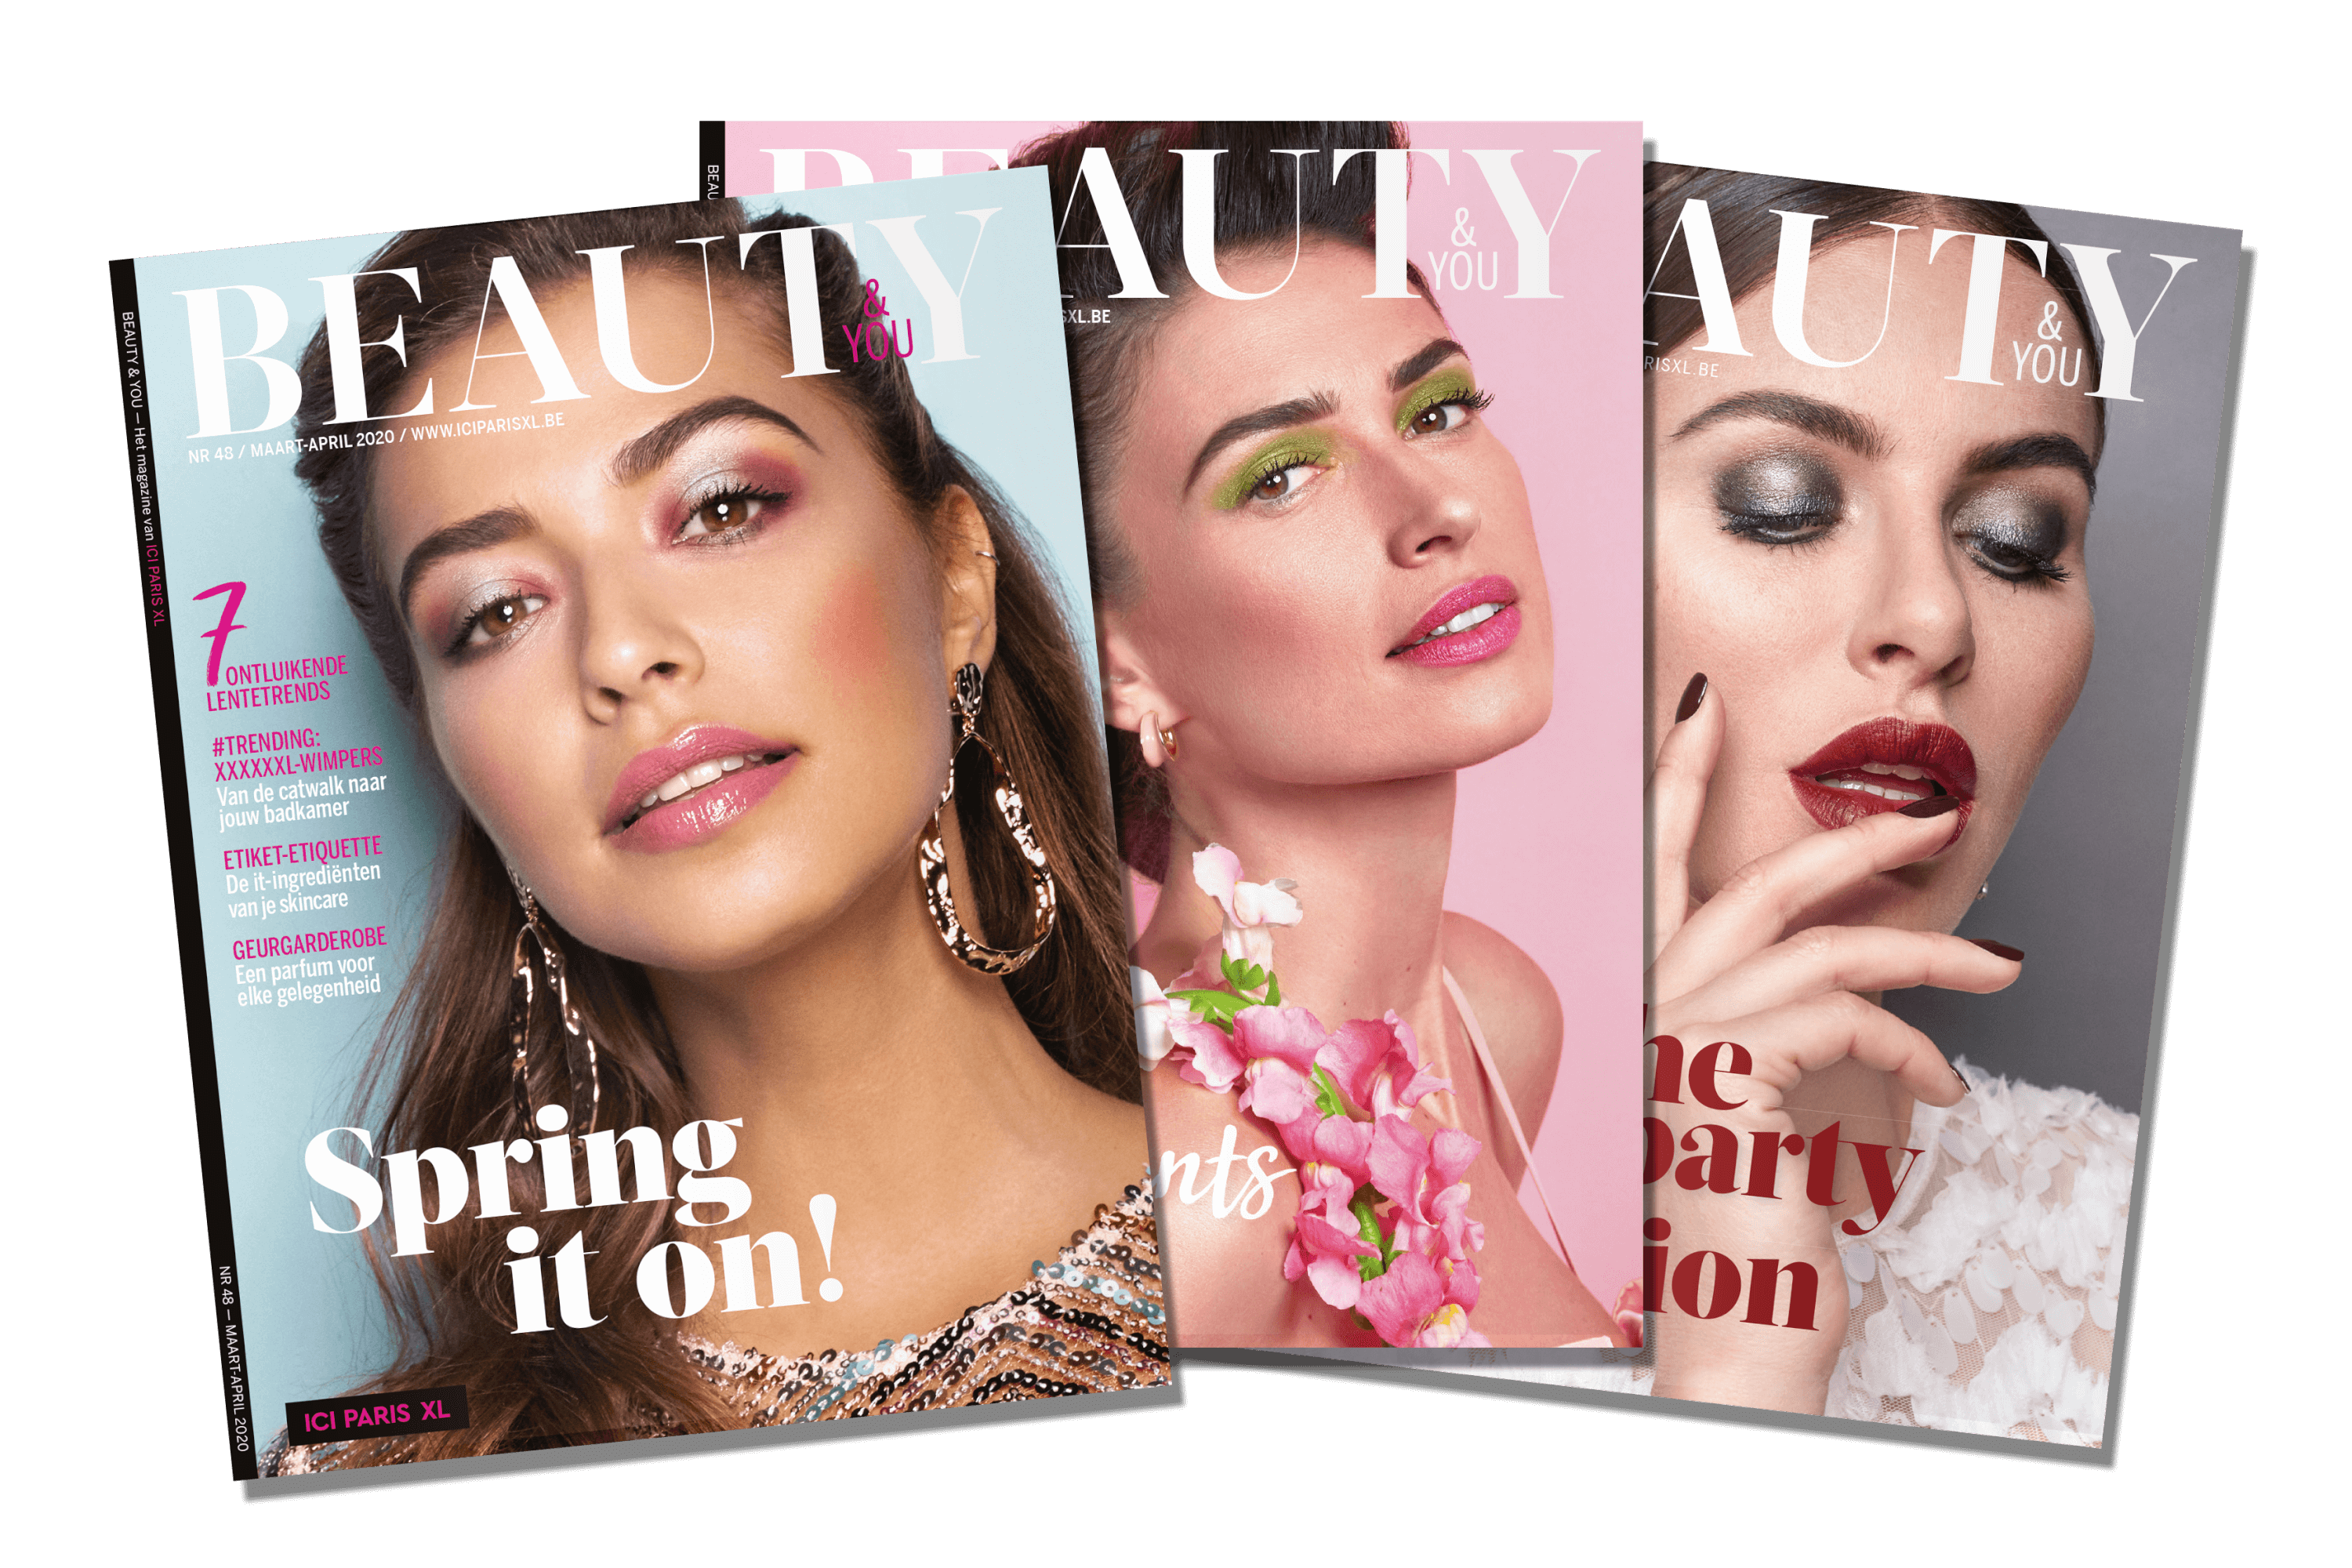 Brand Strategy for ICI PARIS XL: Beauty&You magazine